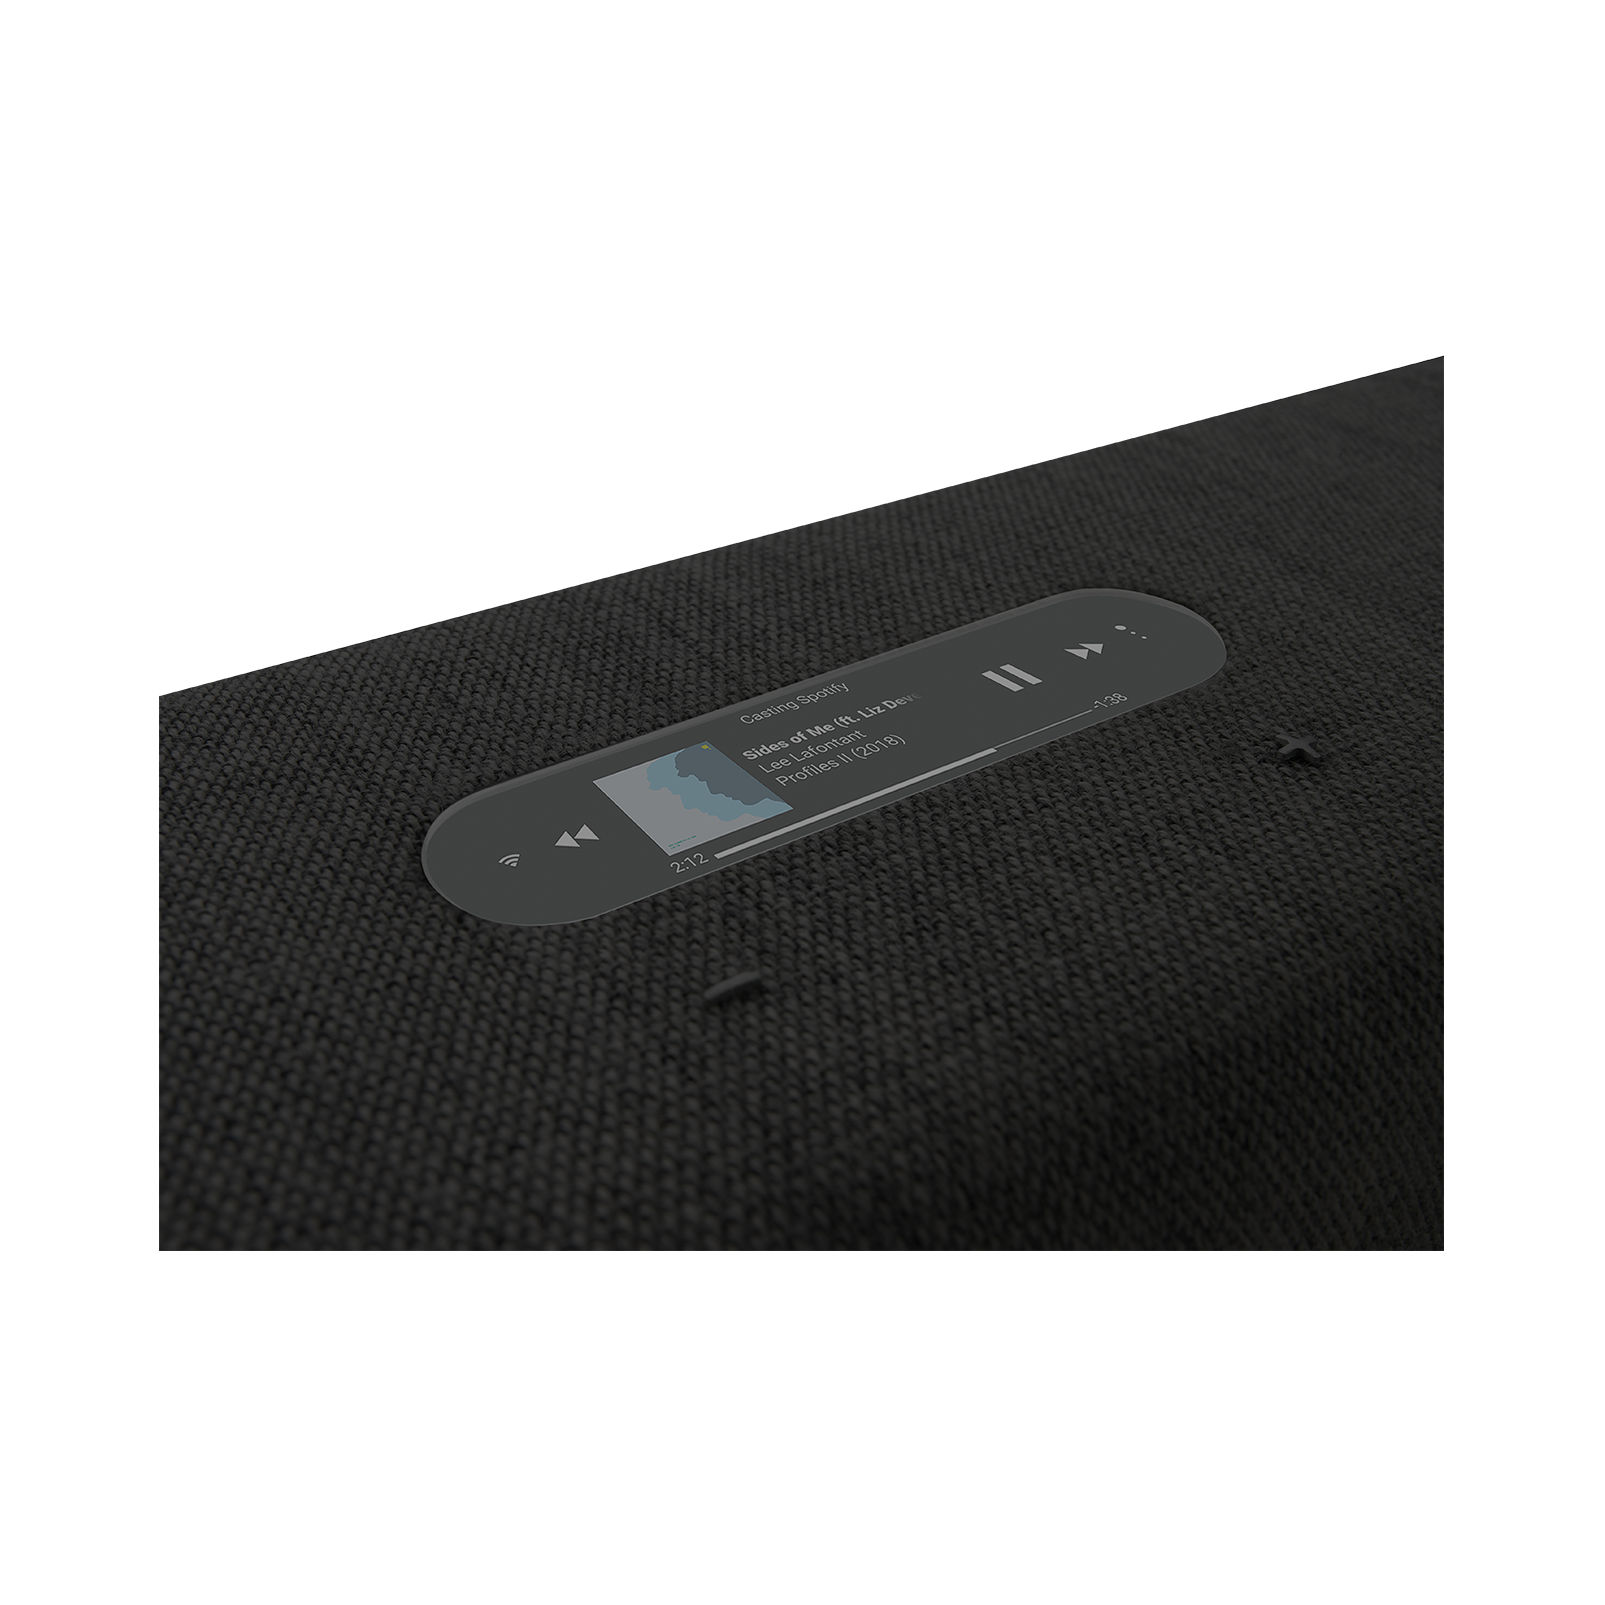 Harman Kardon Citation Bar - Black - The smartest soundbar for movies and music - Detailshot 1